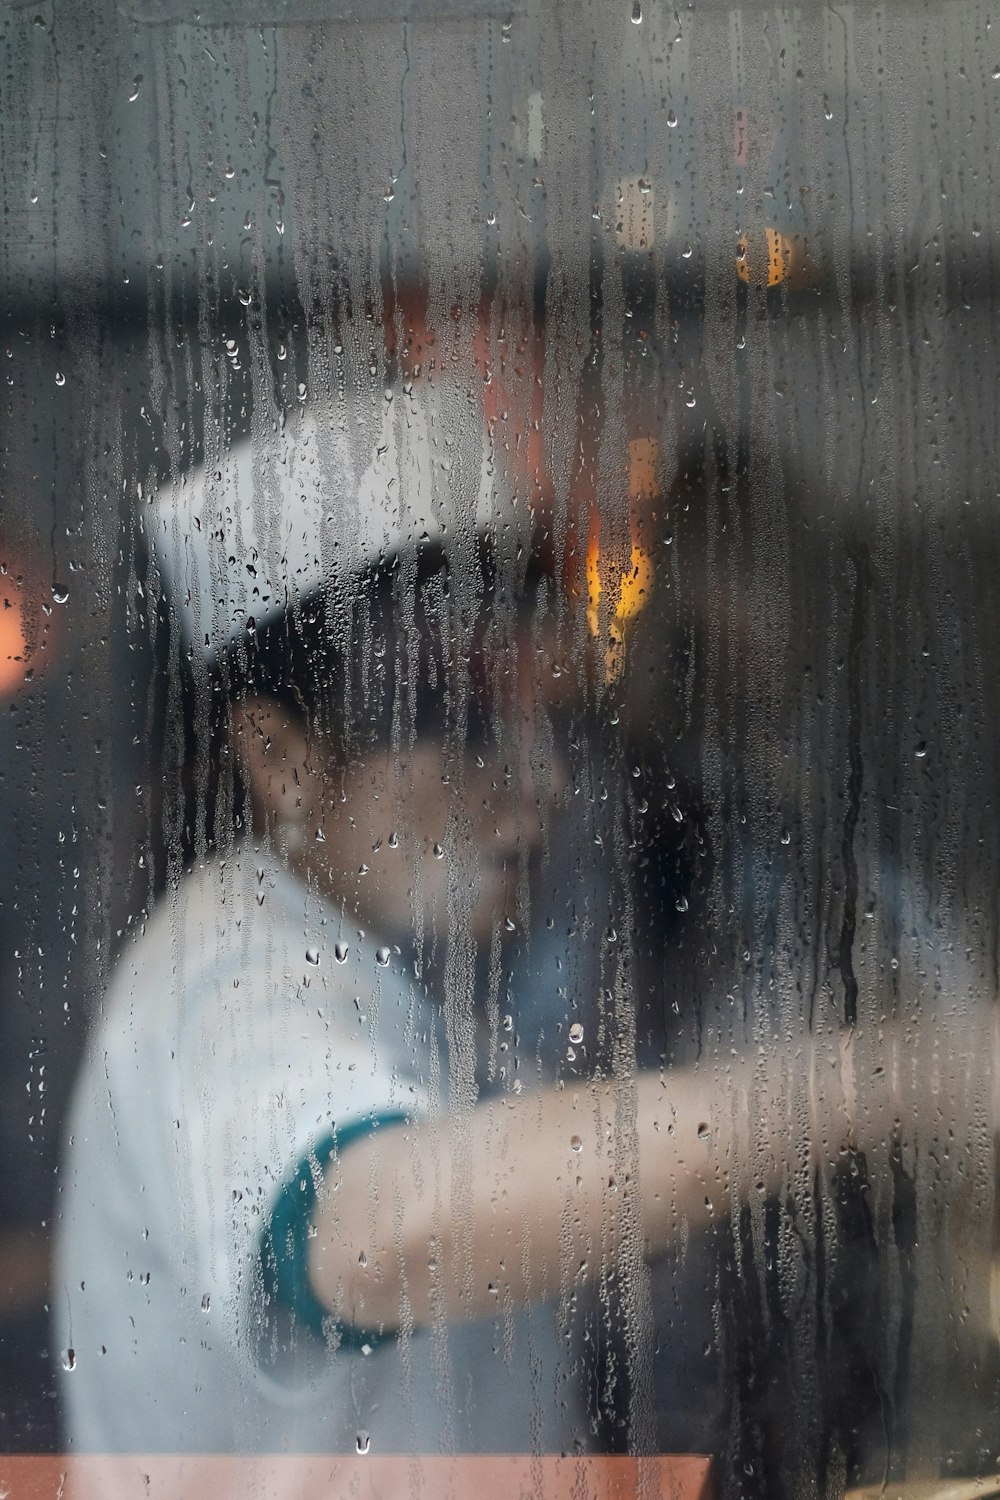 A cook at work seen through a rainy window